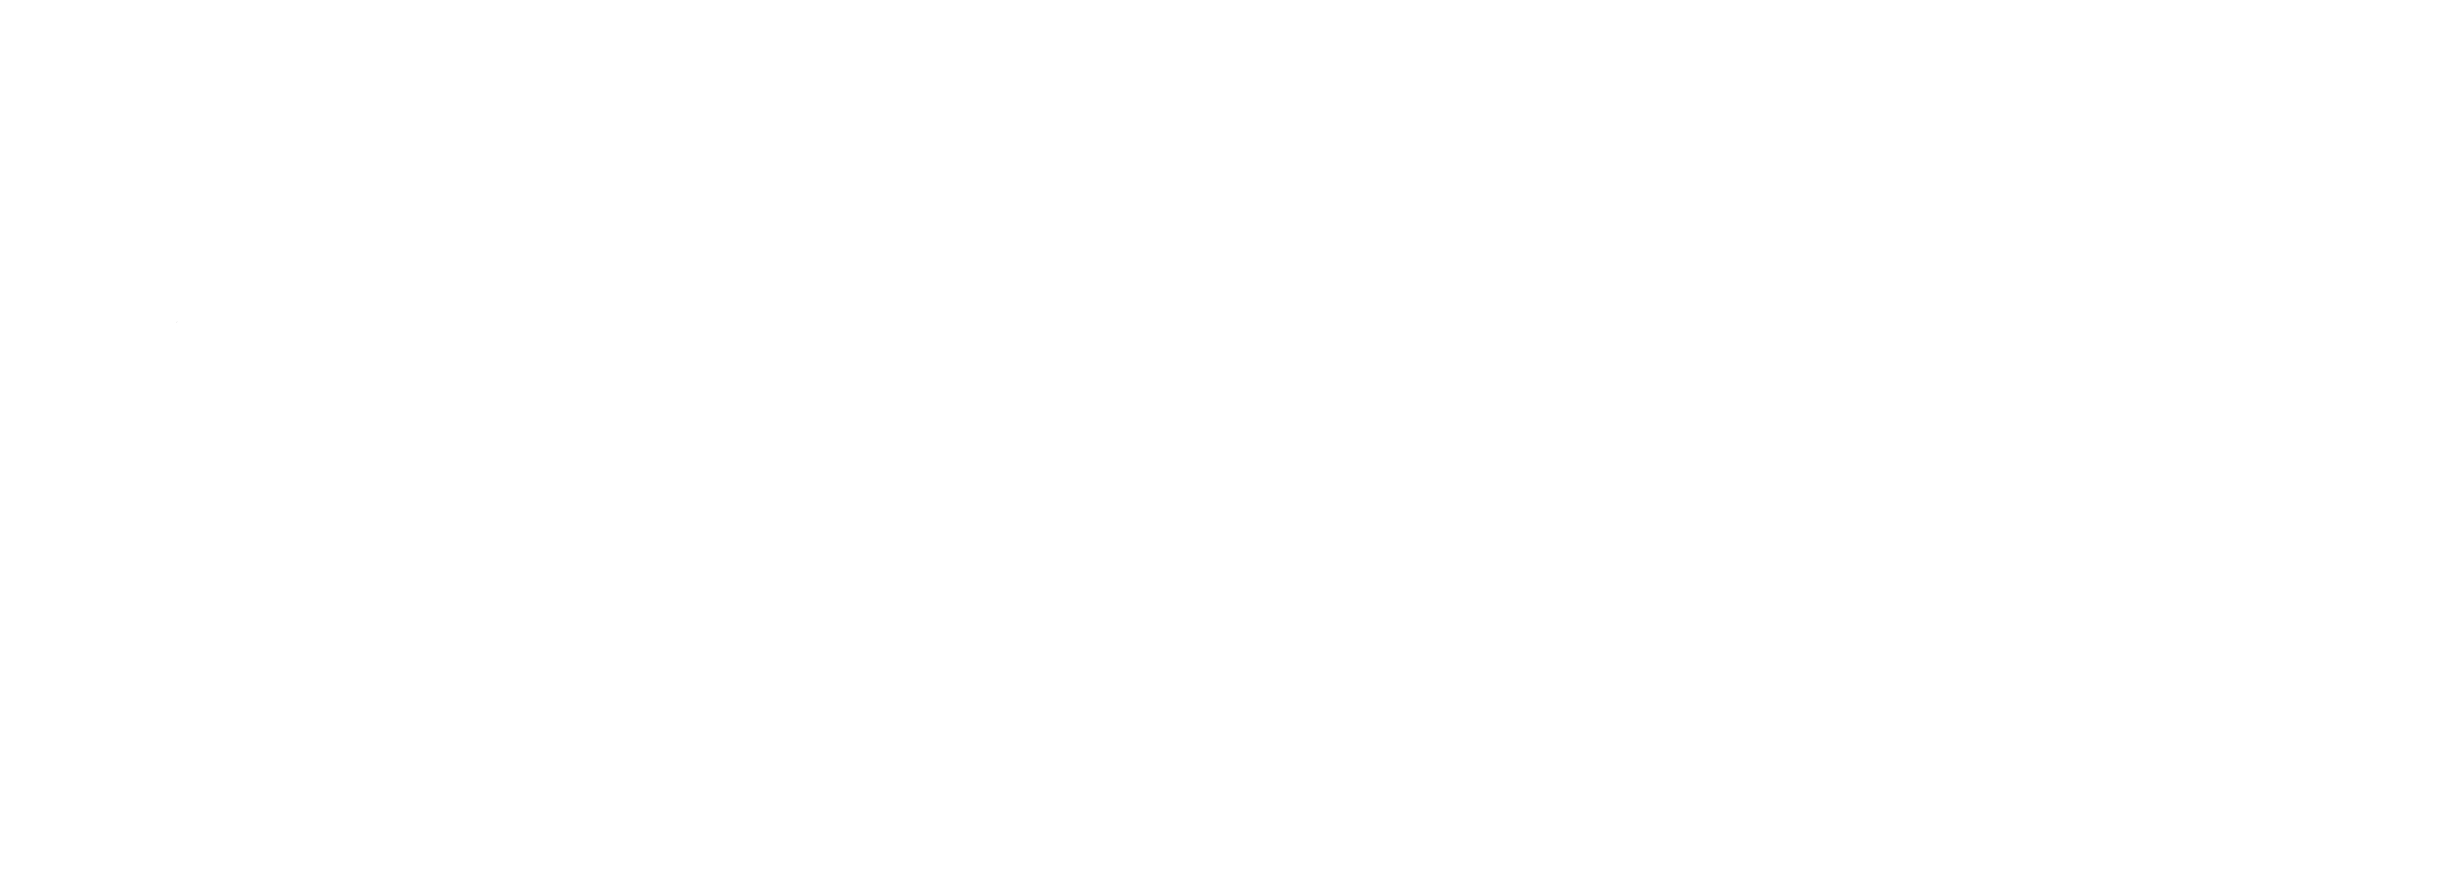 Vera Therapeutics logo grand pour les fonds sombres (PNG transparent)